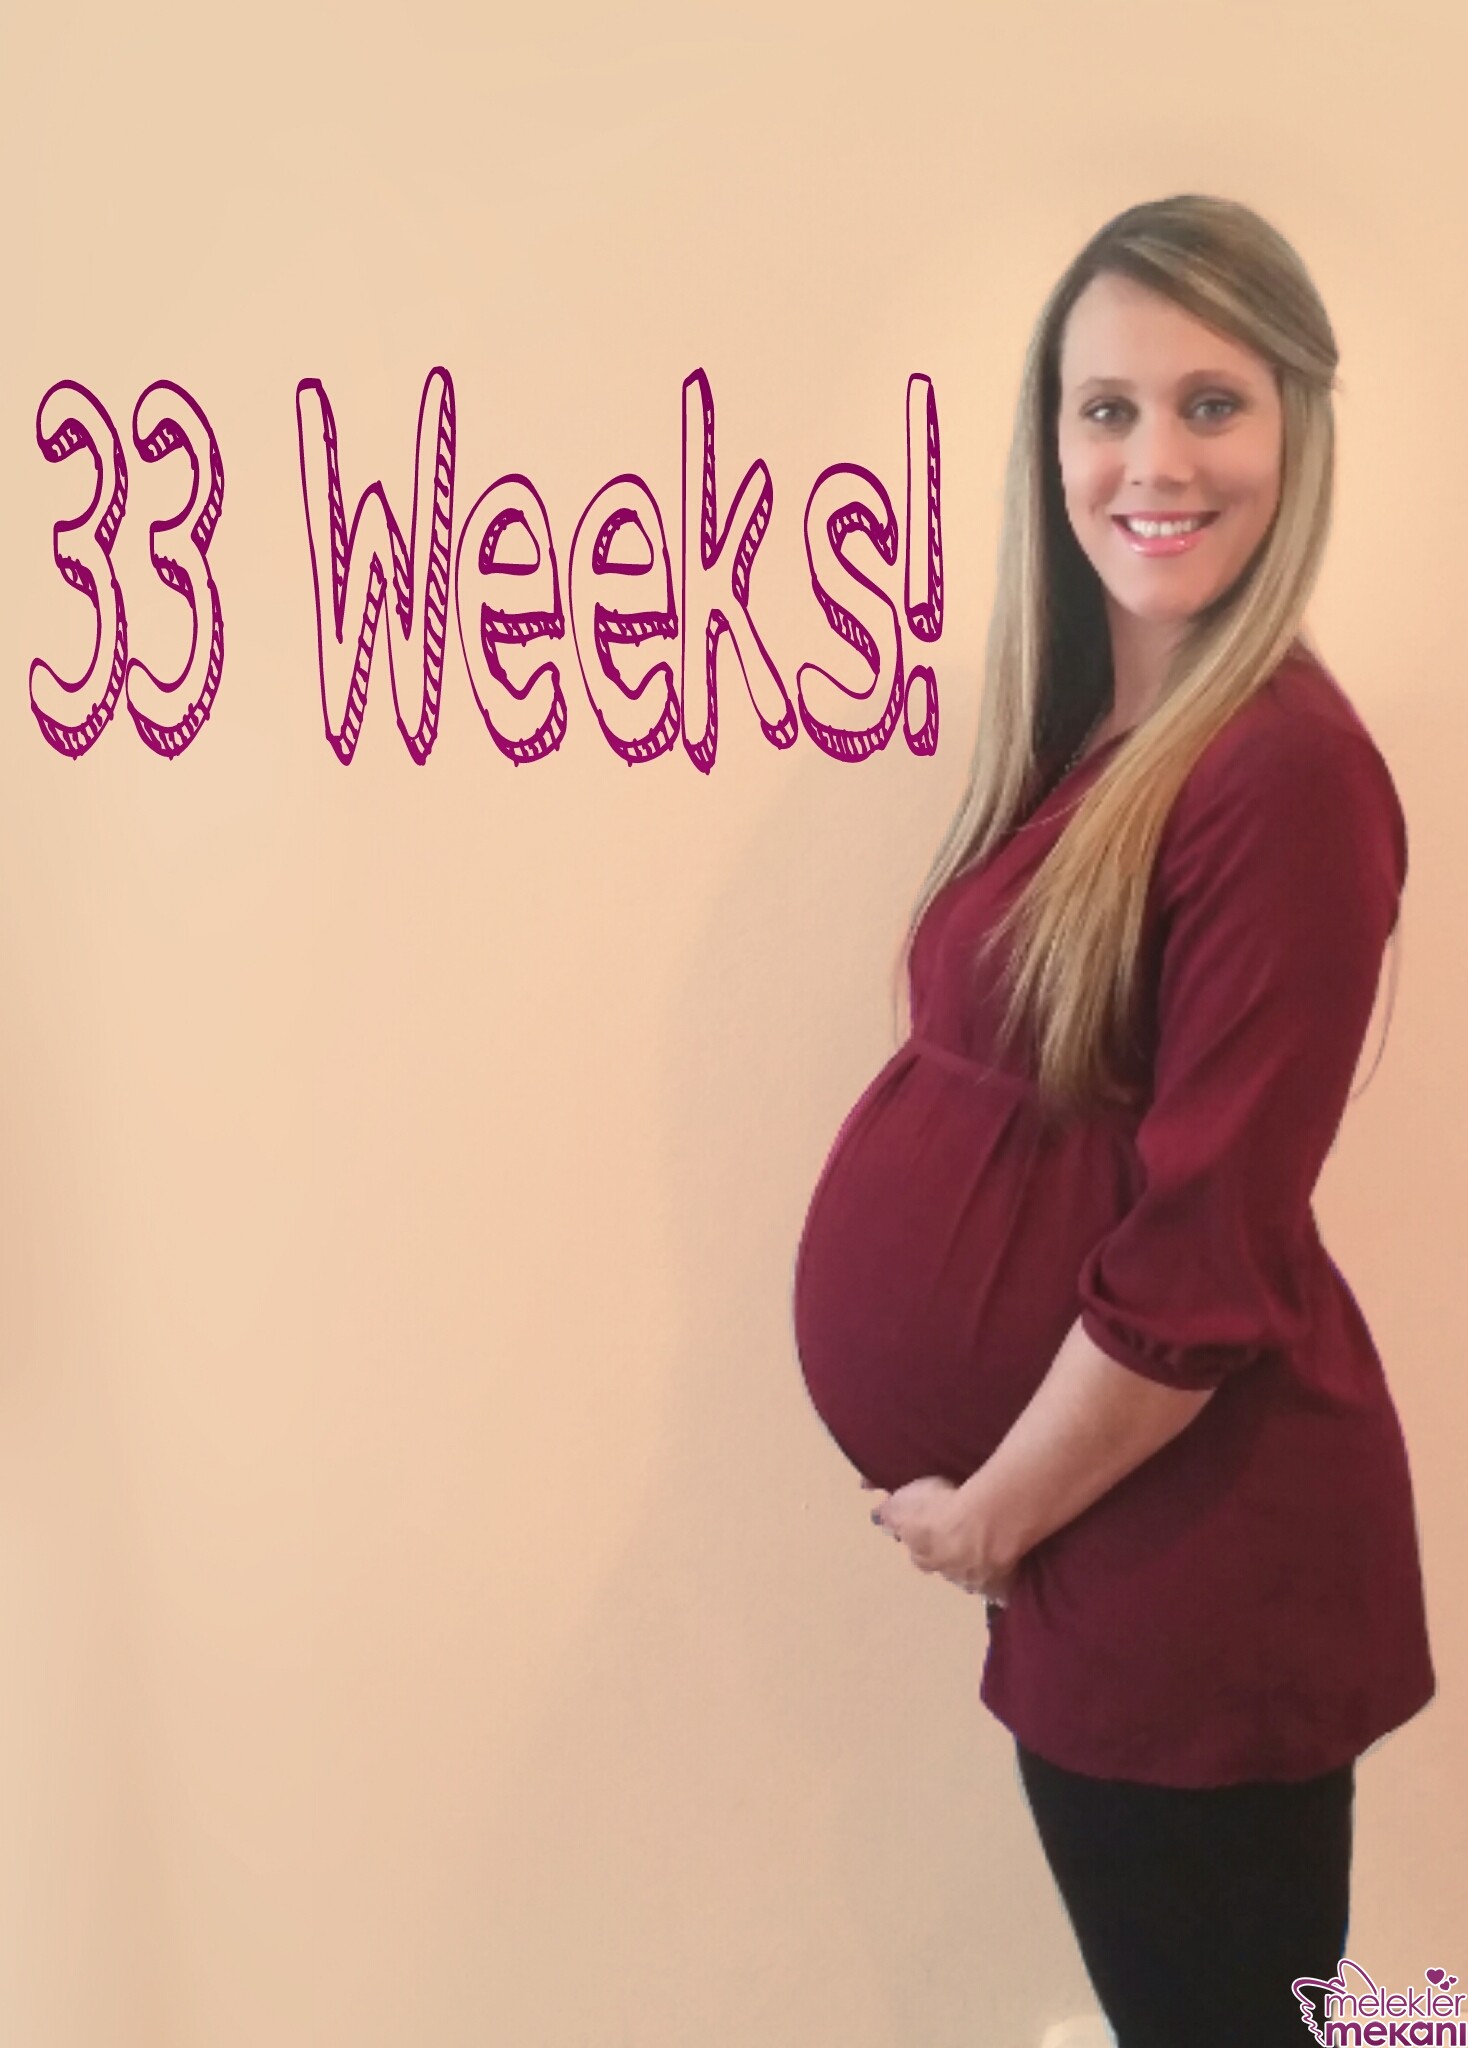 33 haftalik anne adayi.jpg